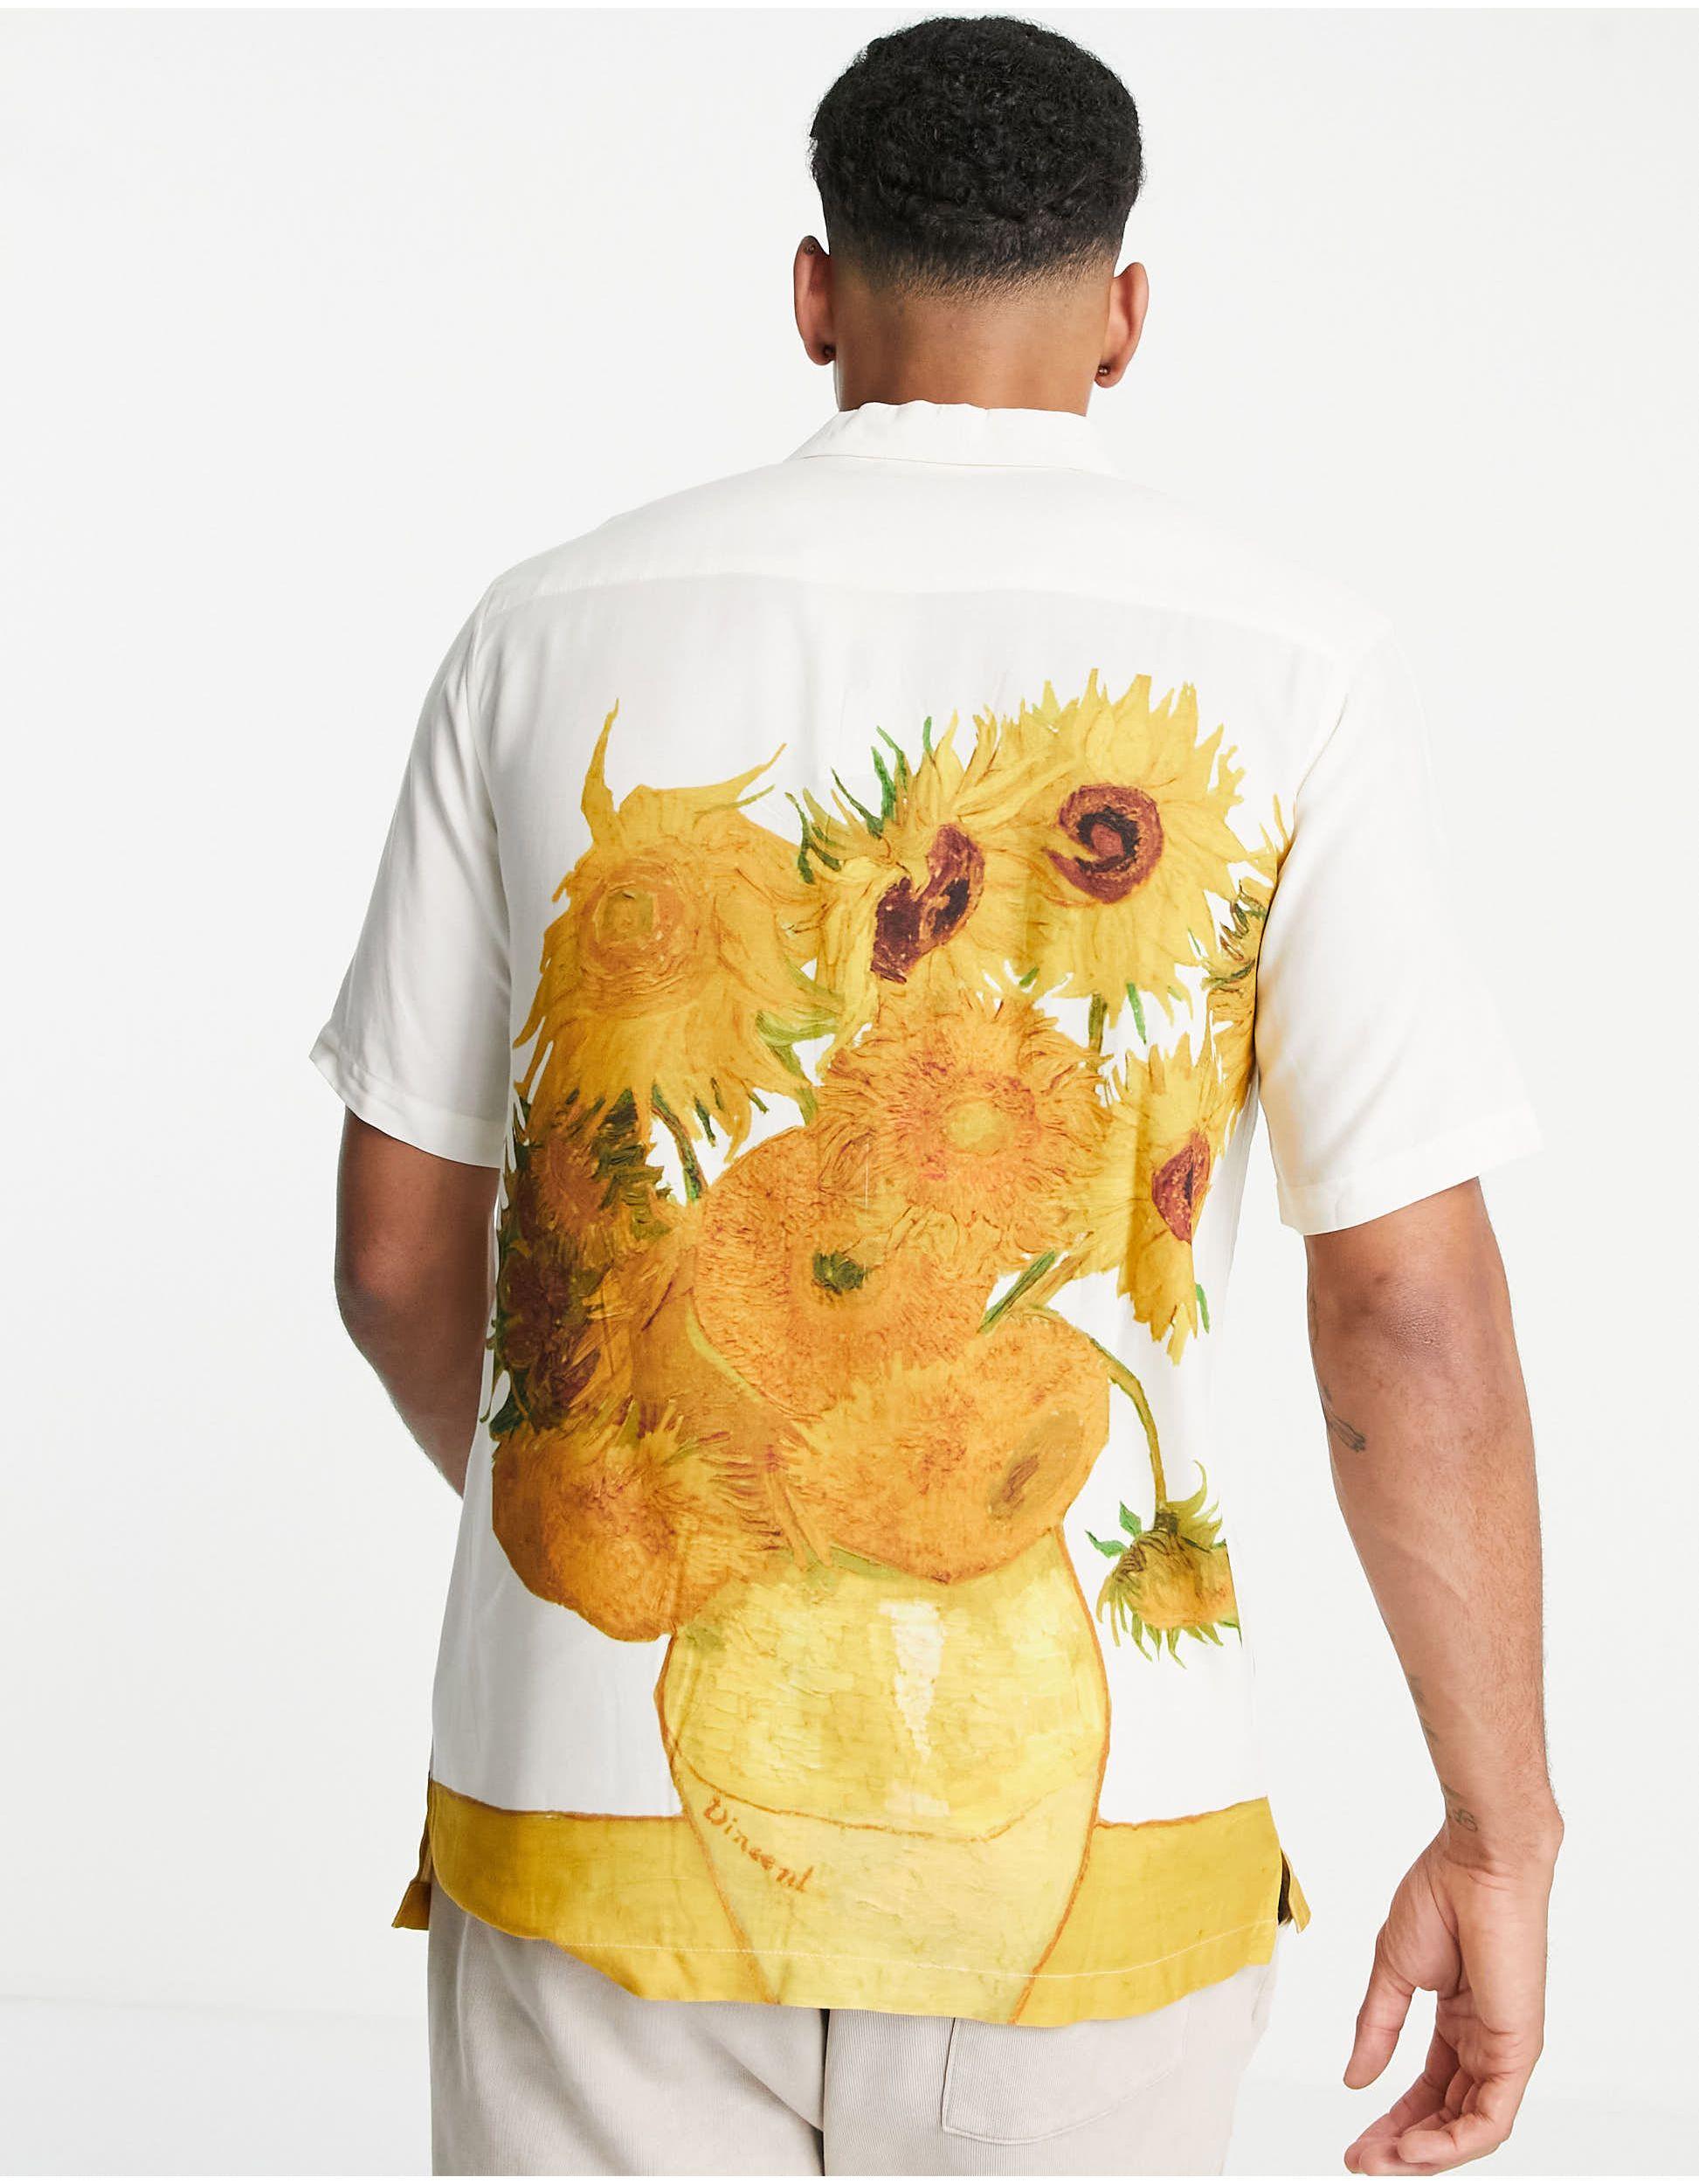 Arbitrage Bonus stressende TOPMAN Vincent Van Gogh Sunflower Shirt Print for Men | Lyst